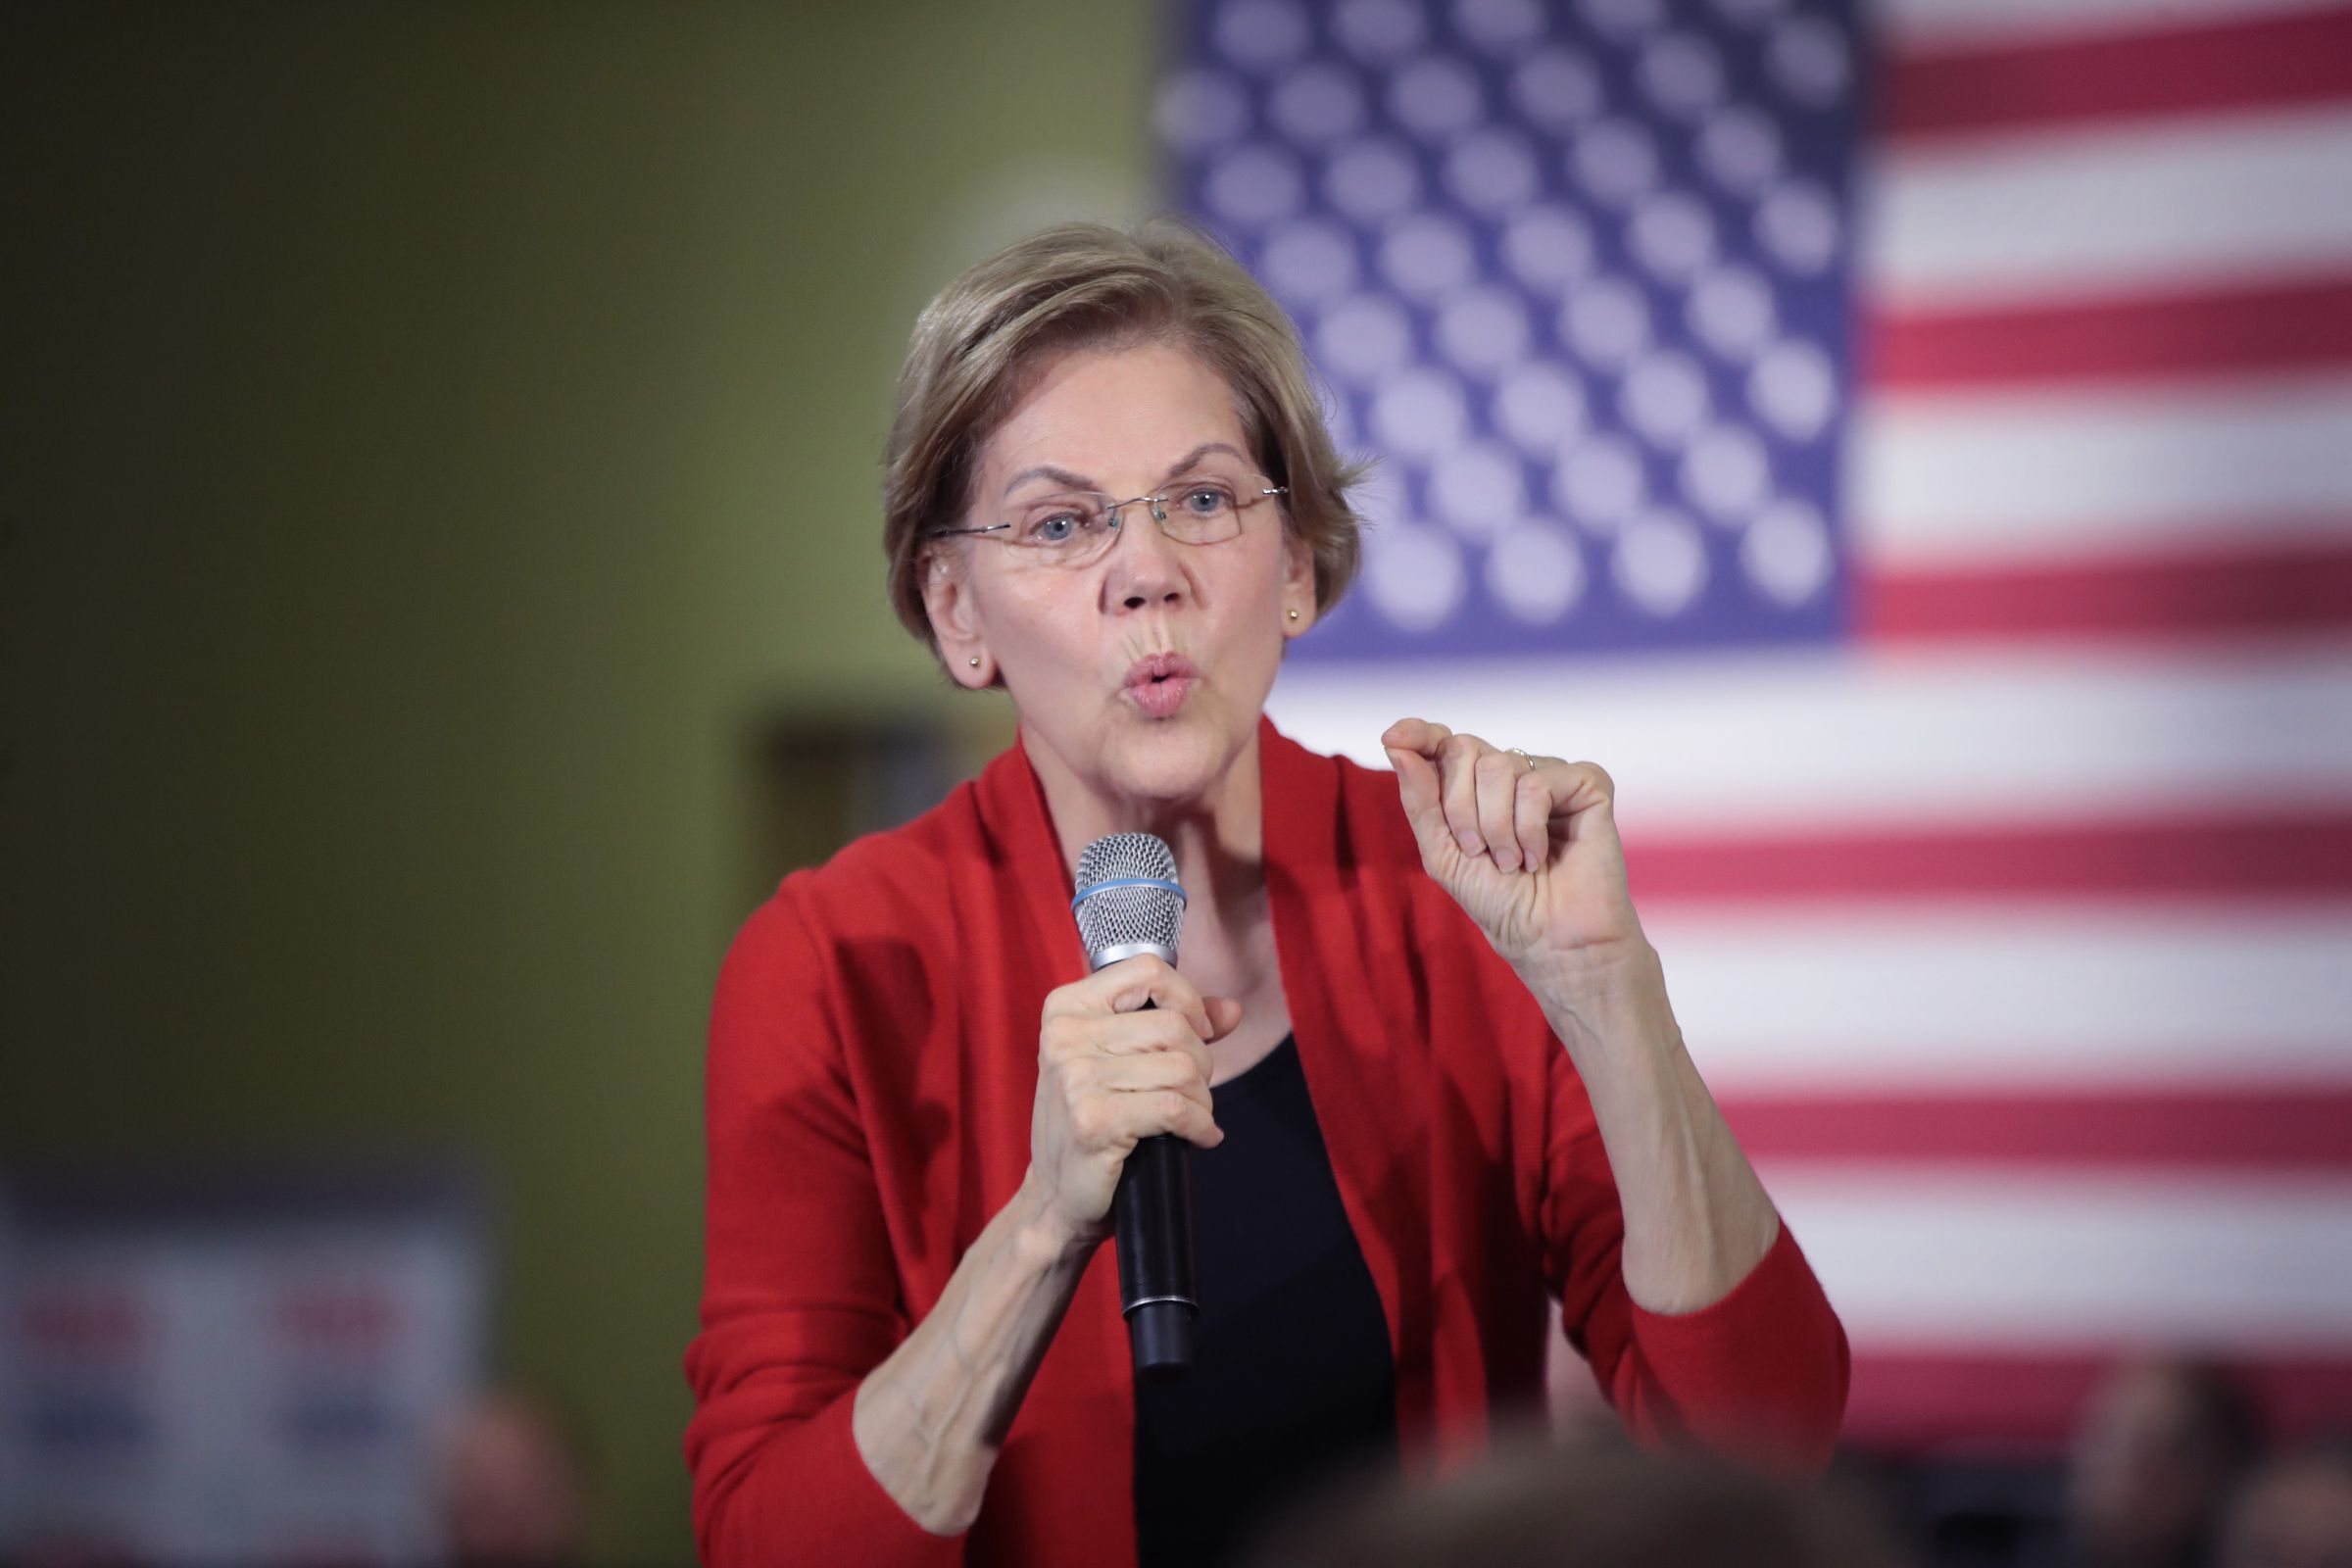 Presidential Candidate Elizabeth Warren Campaigns In Eastern Iowa